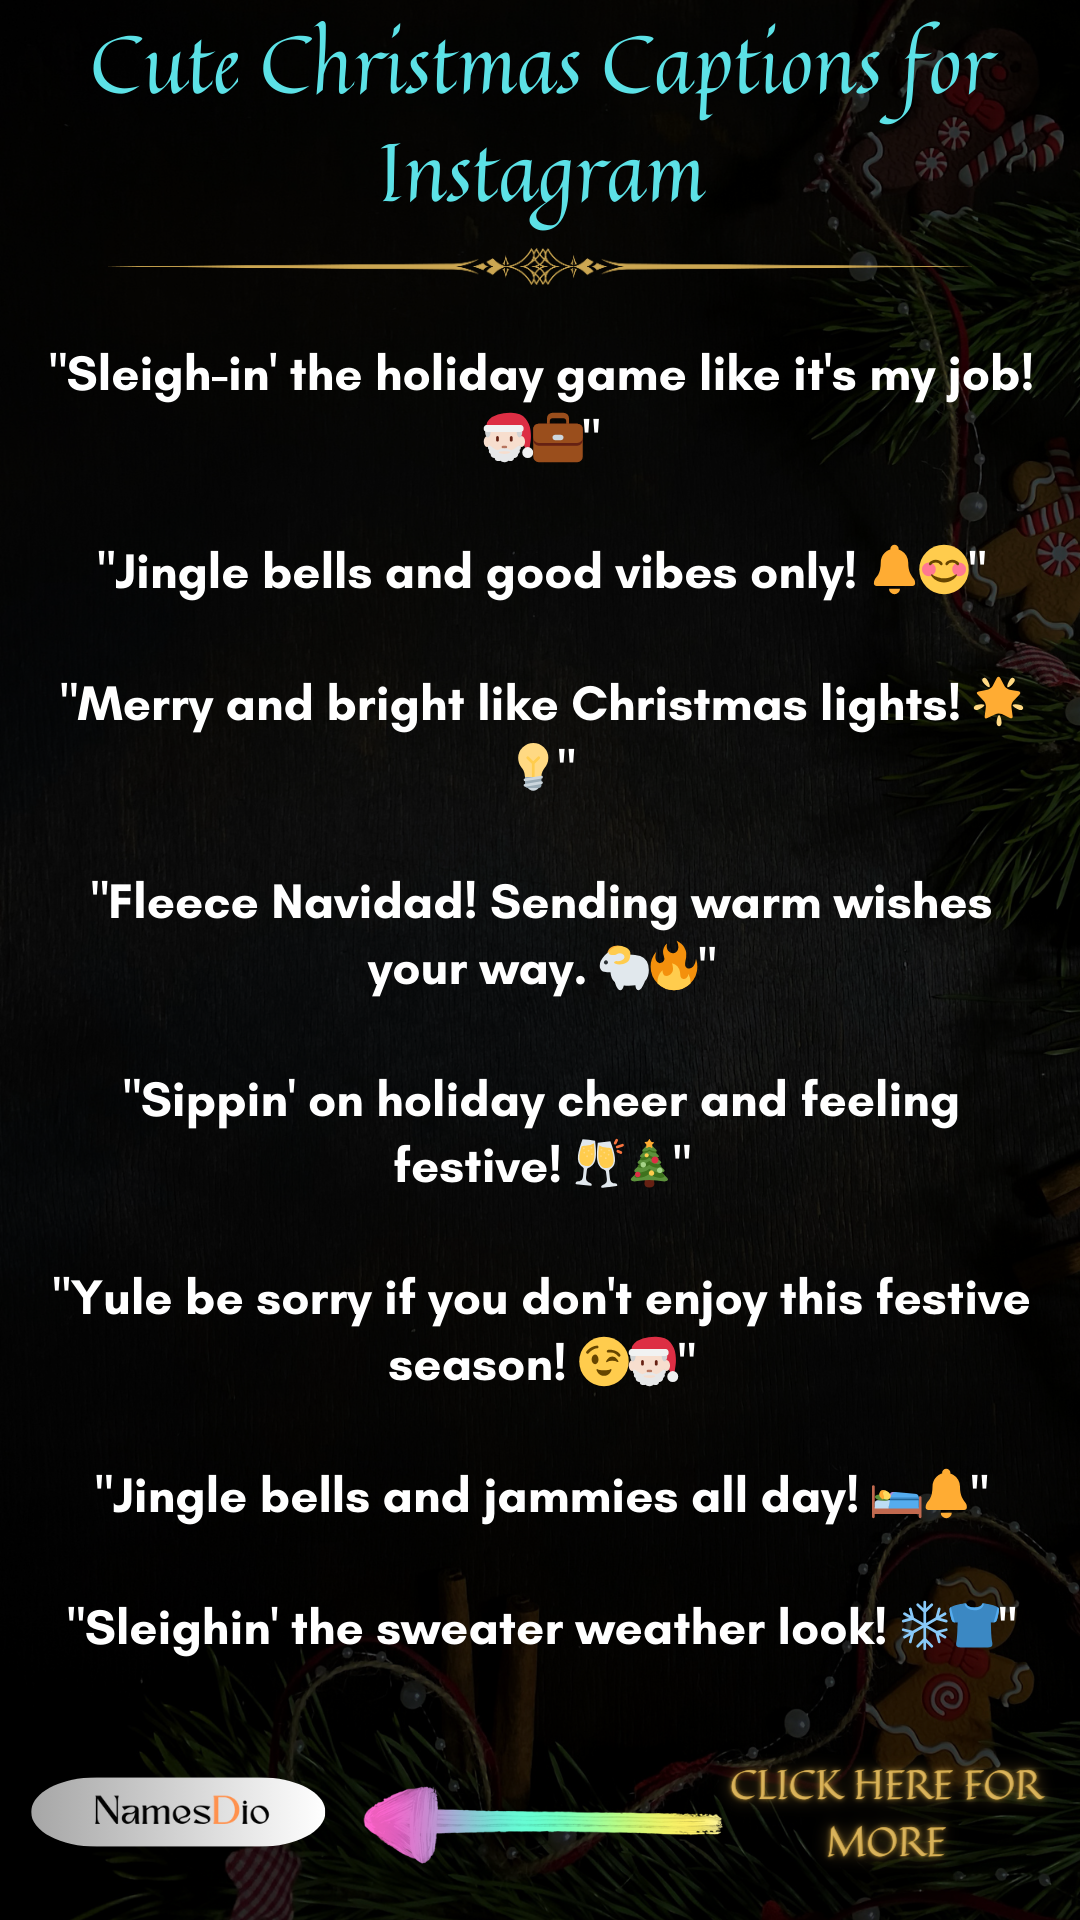 Cute-Christmas-Captions-for-Instagram